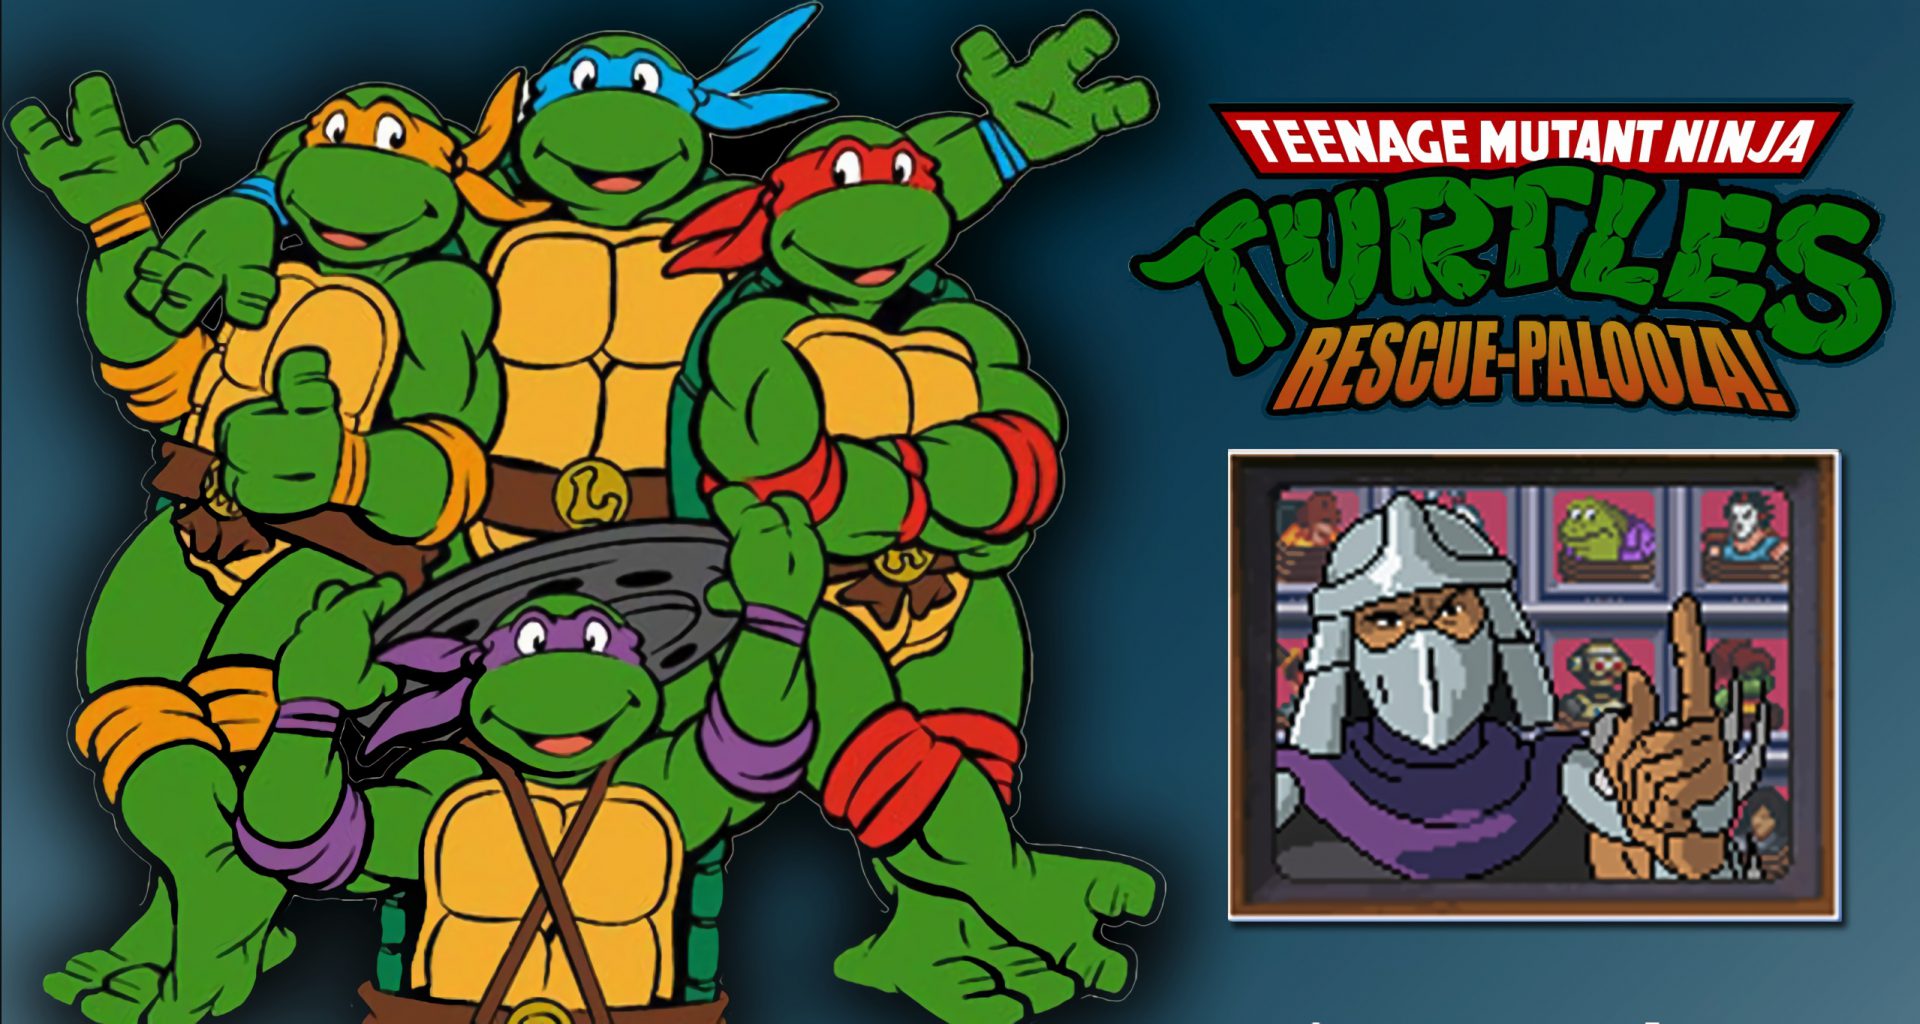 Gratis para PC: Teenage Mutant Ninja Turtles: Rescue-Palooza!